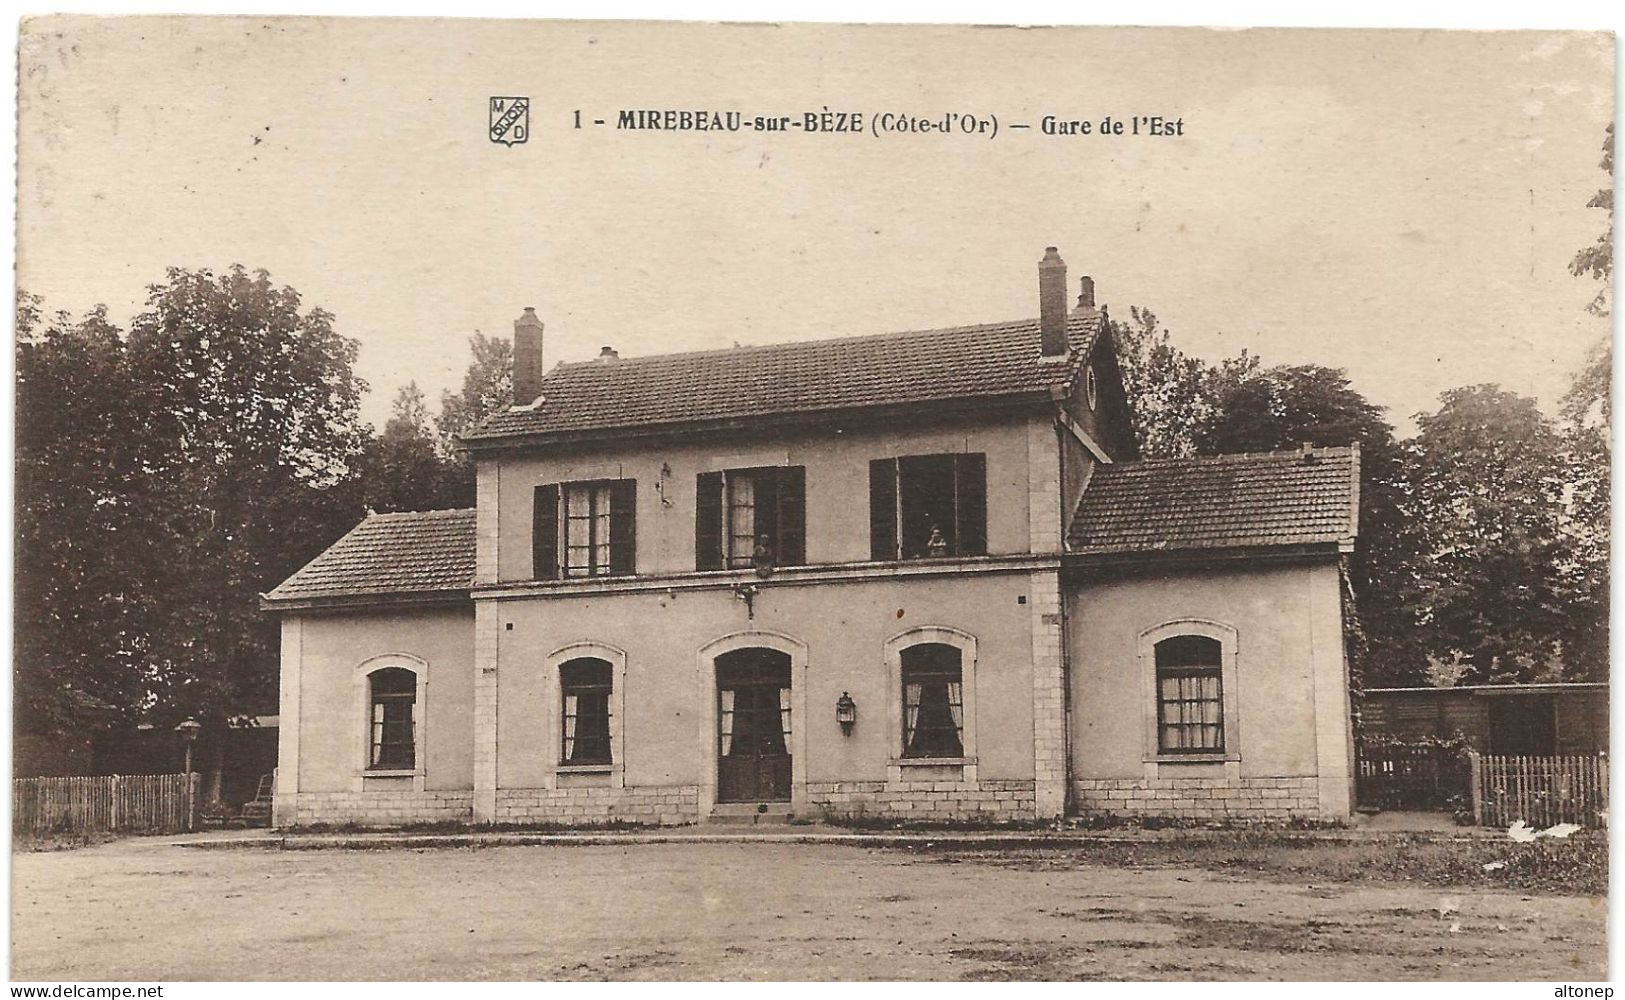 Mirebeau : Gare De L'Est (Edition Collot - MD Dijon N°1 - Louys Et Bauer, Dijon) - Mirebeau